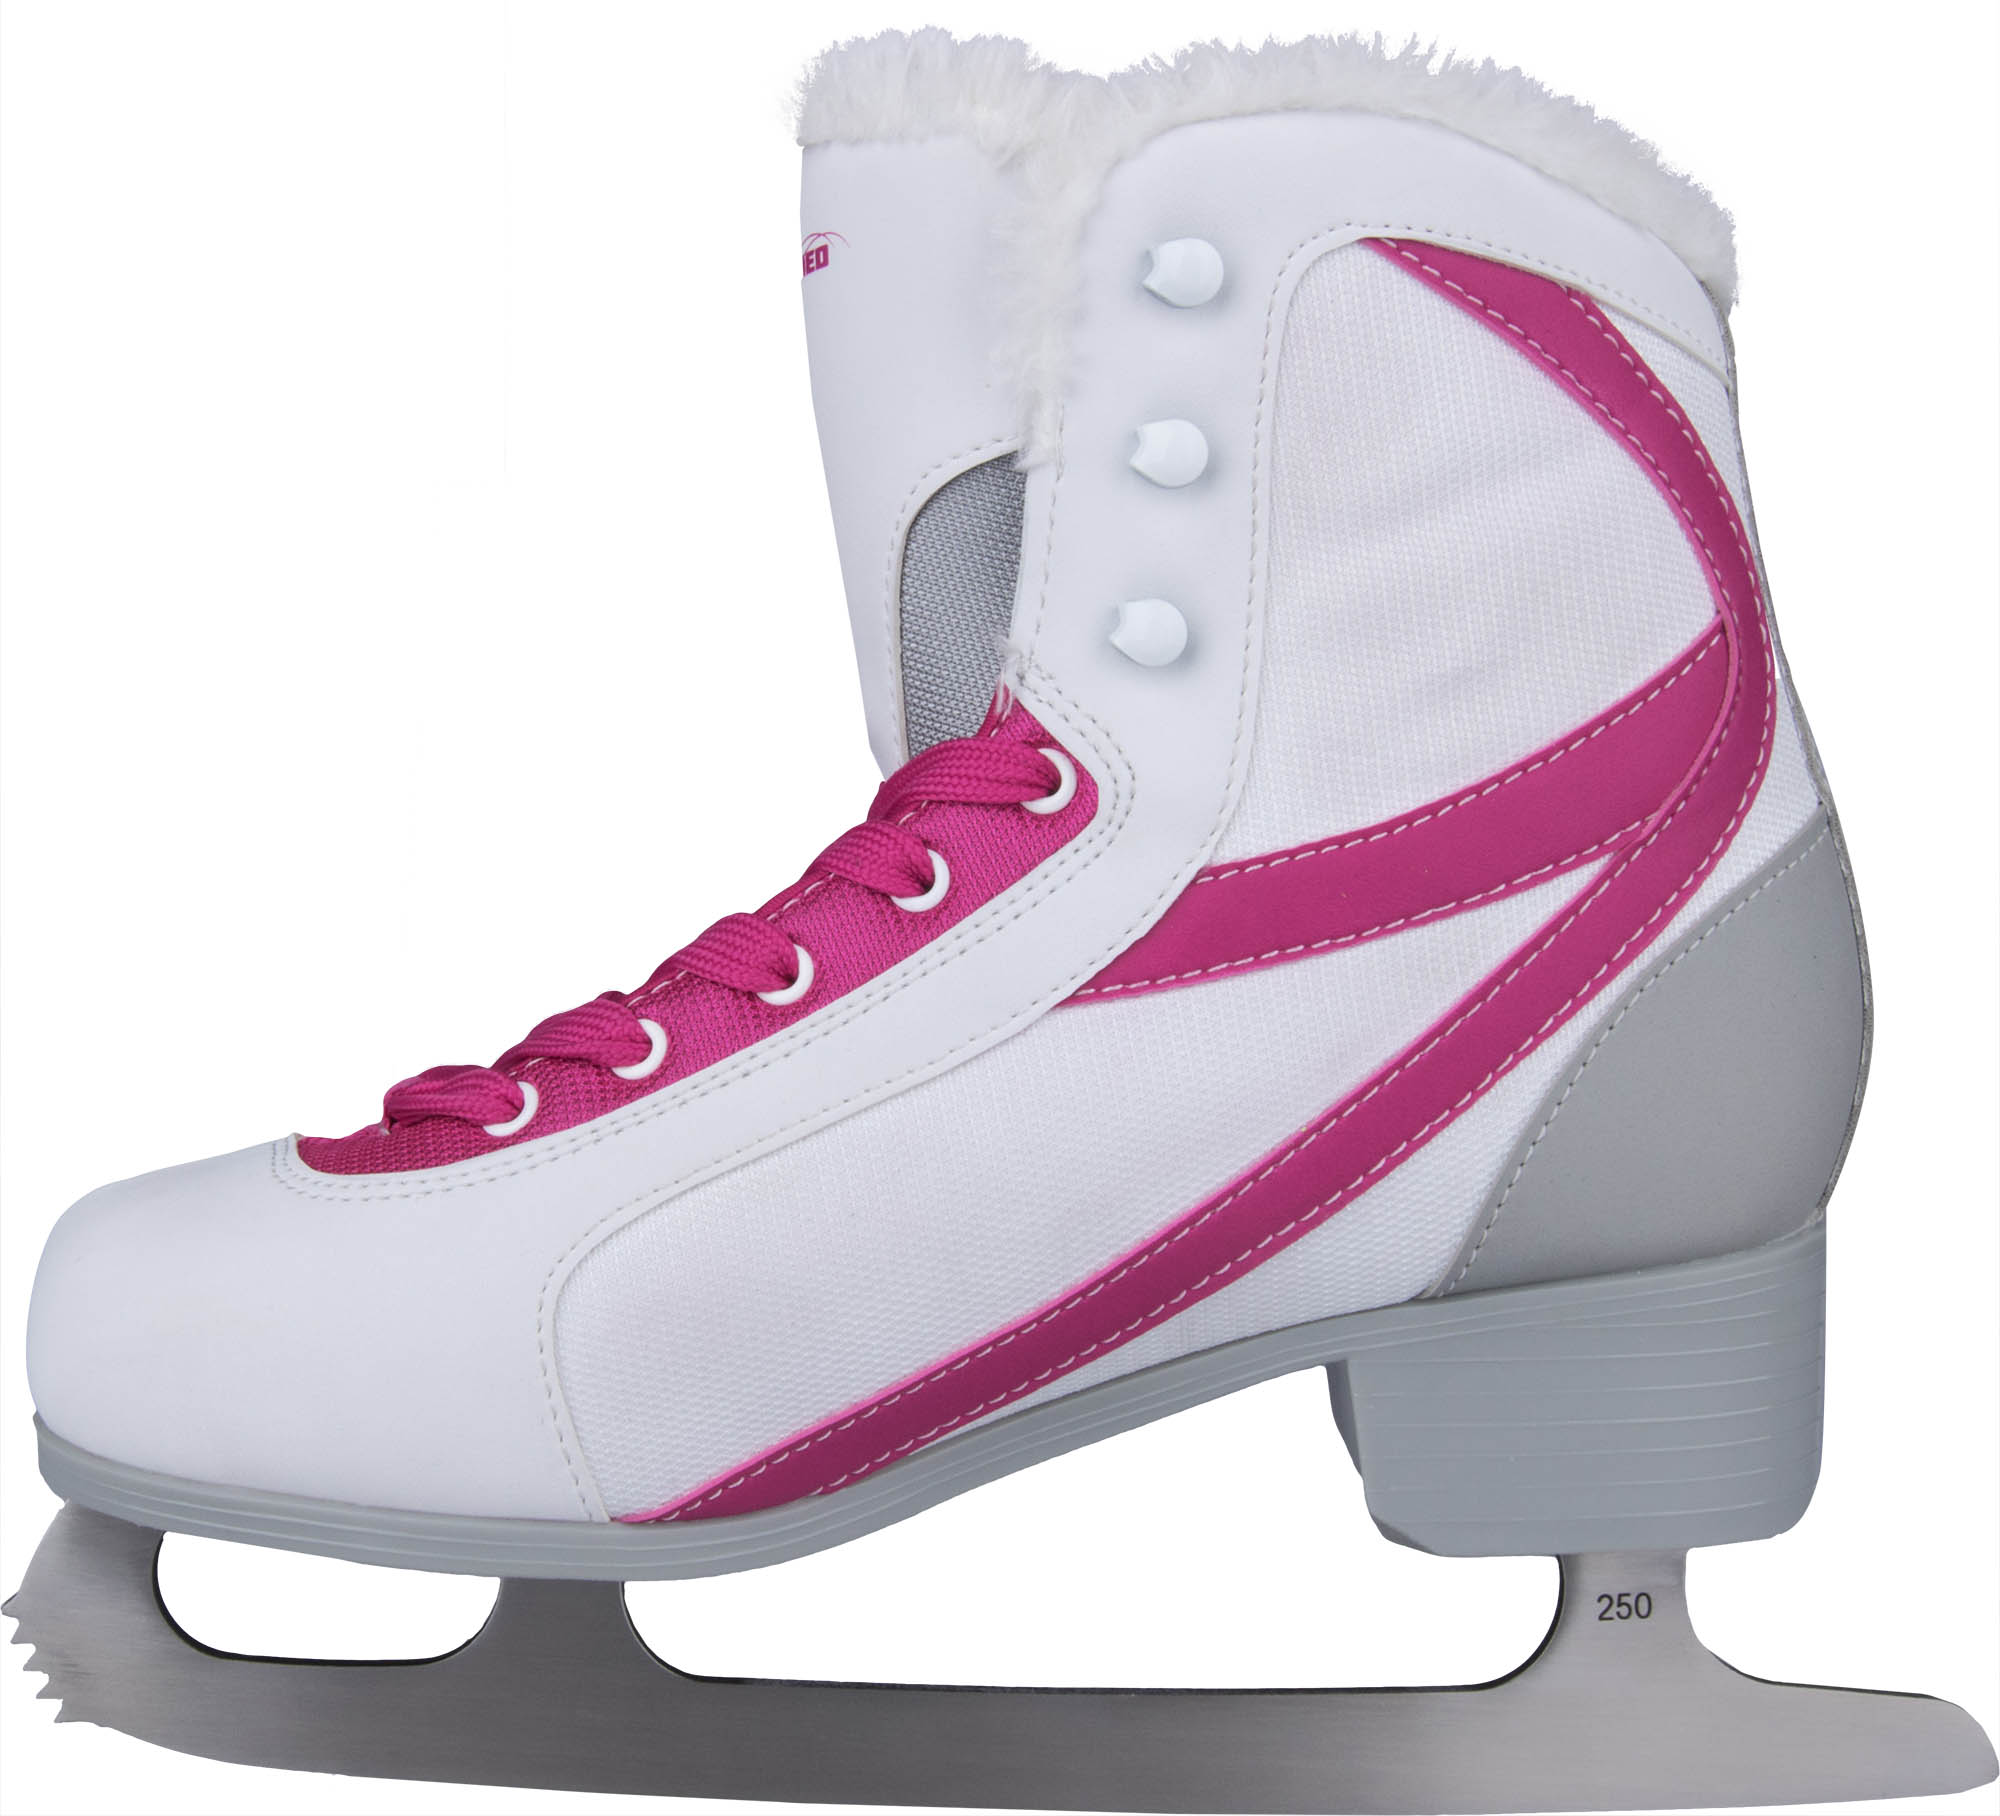 Women’s ice skates